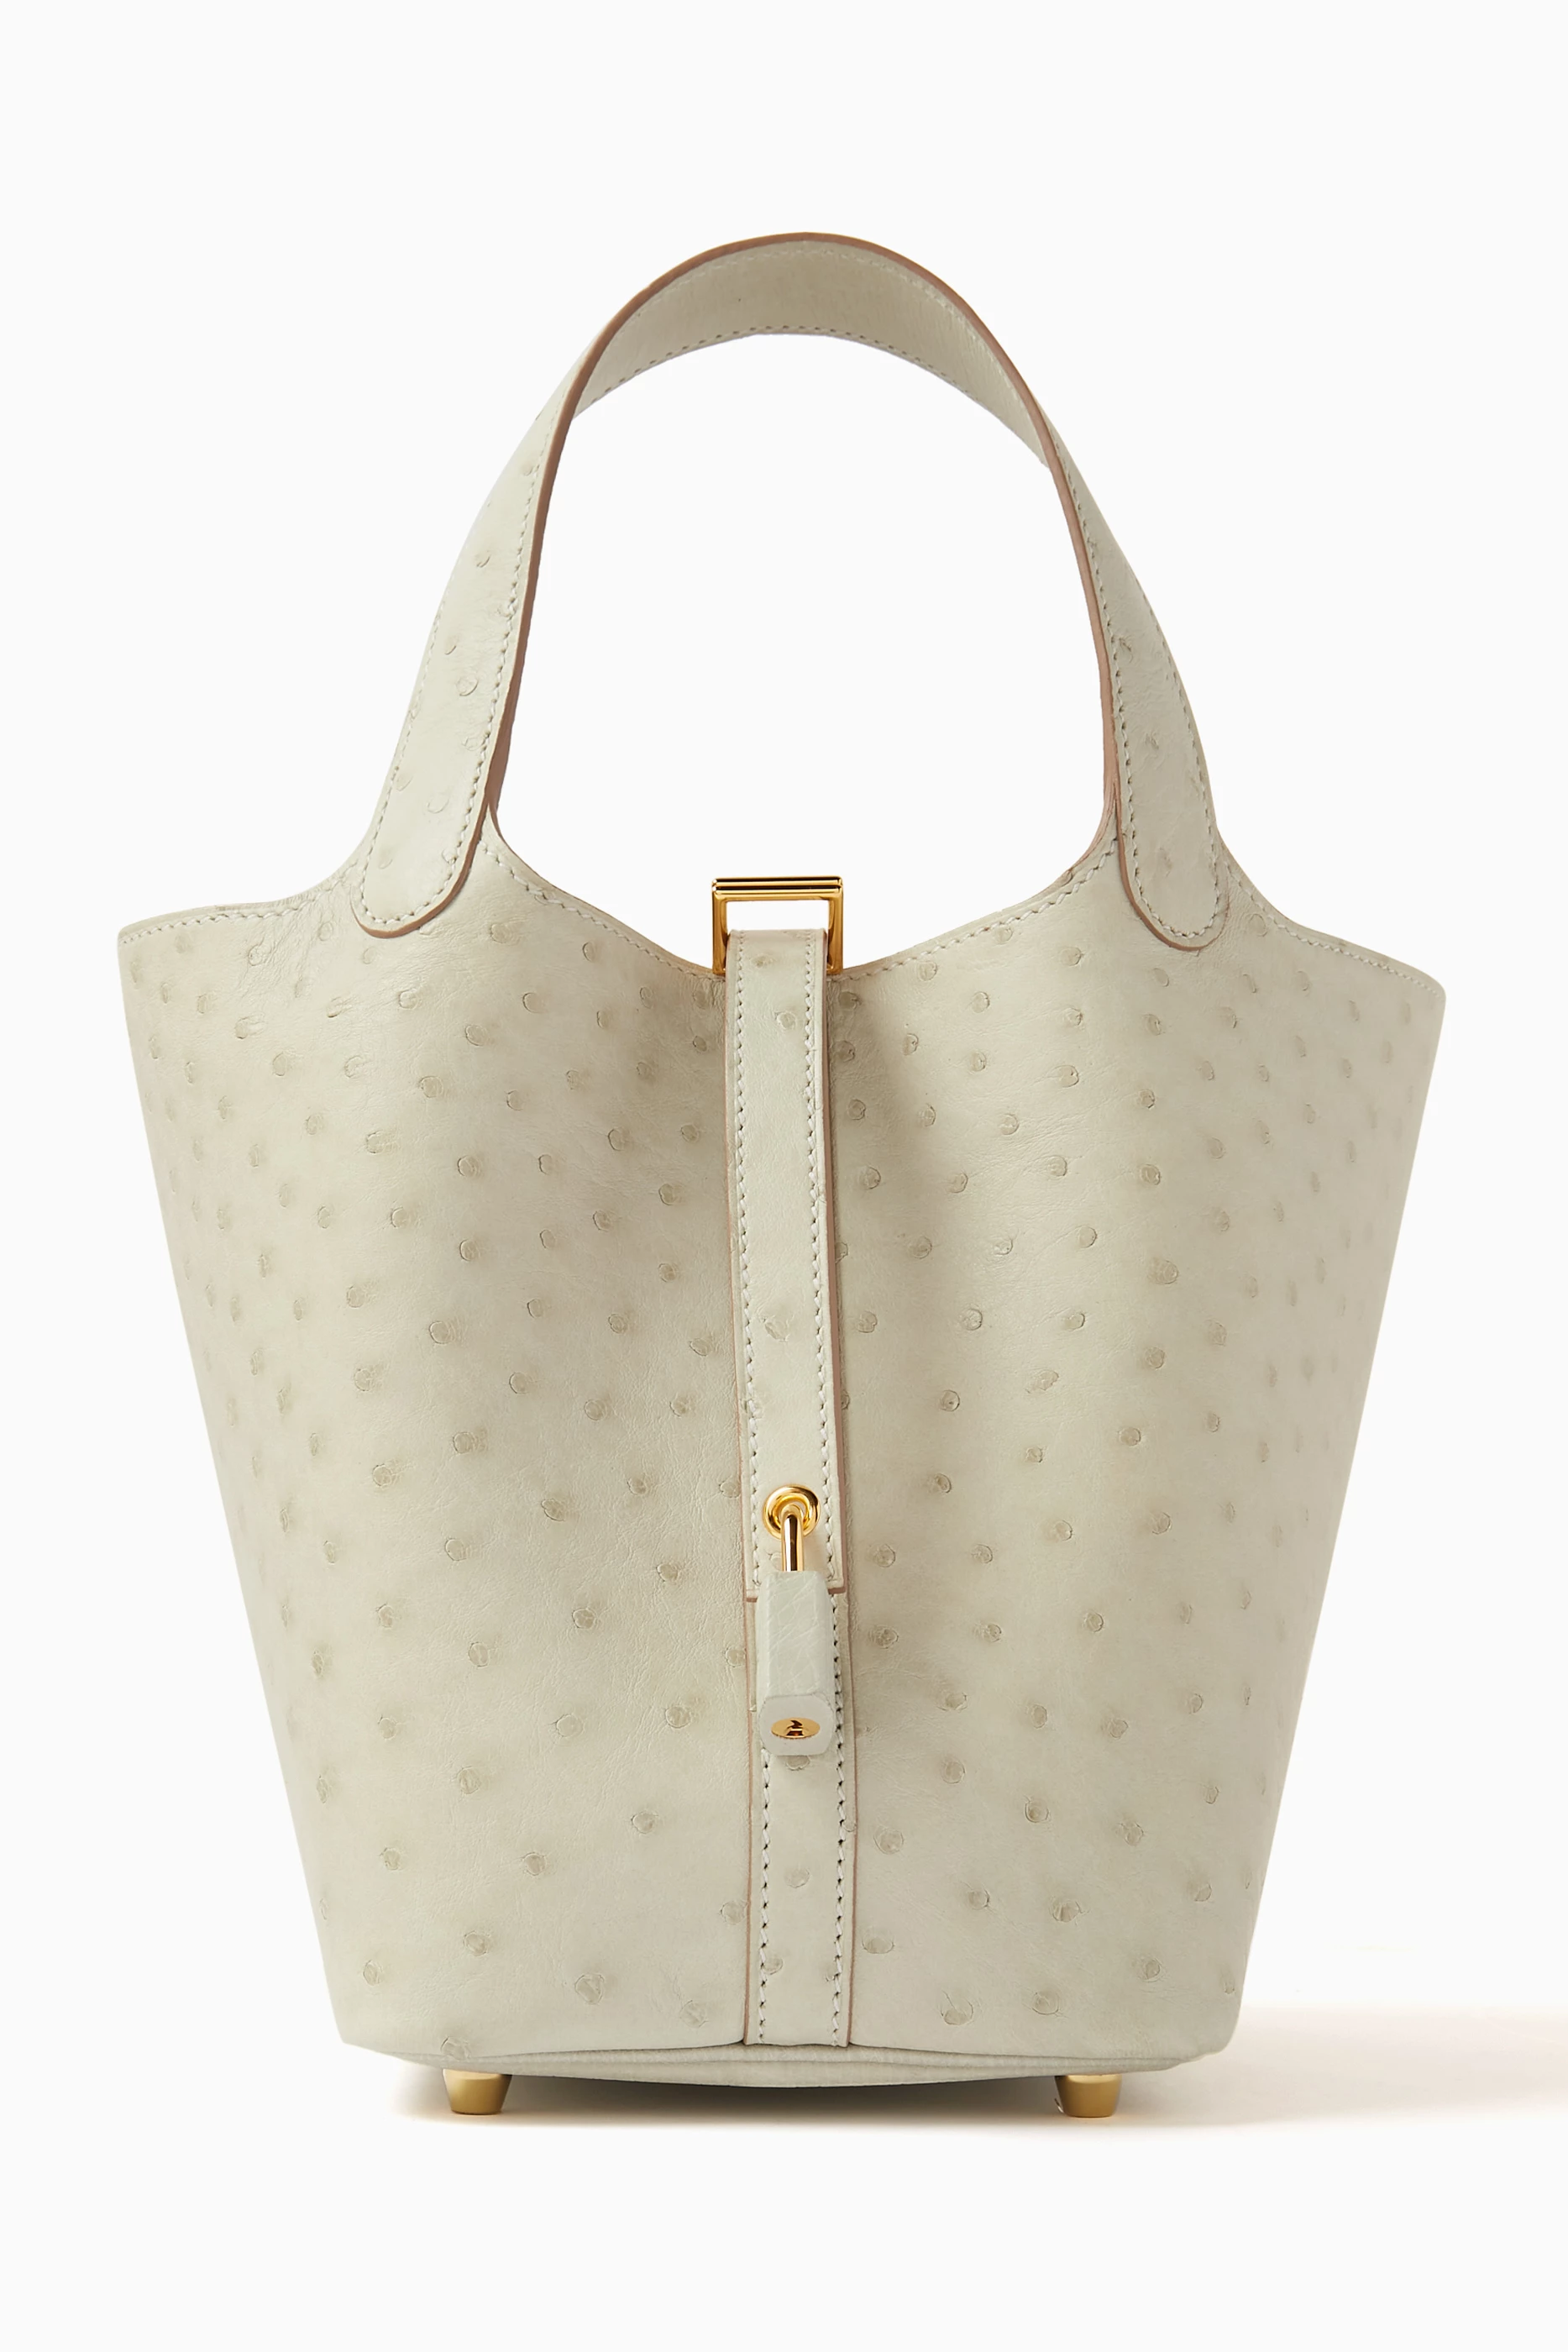 Hermès - Authenticated Picotin Handbag - Ostrich Beige Plain for Women, Never Worn